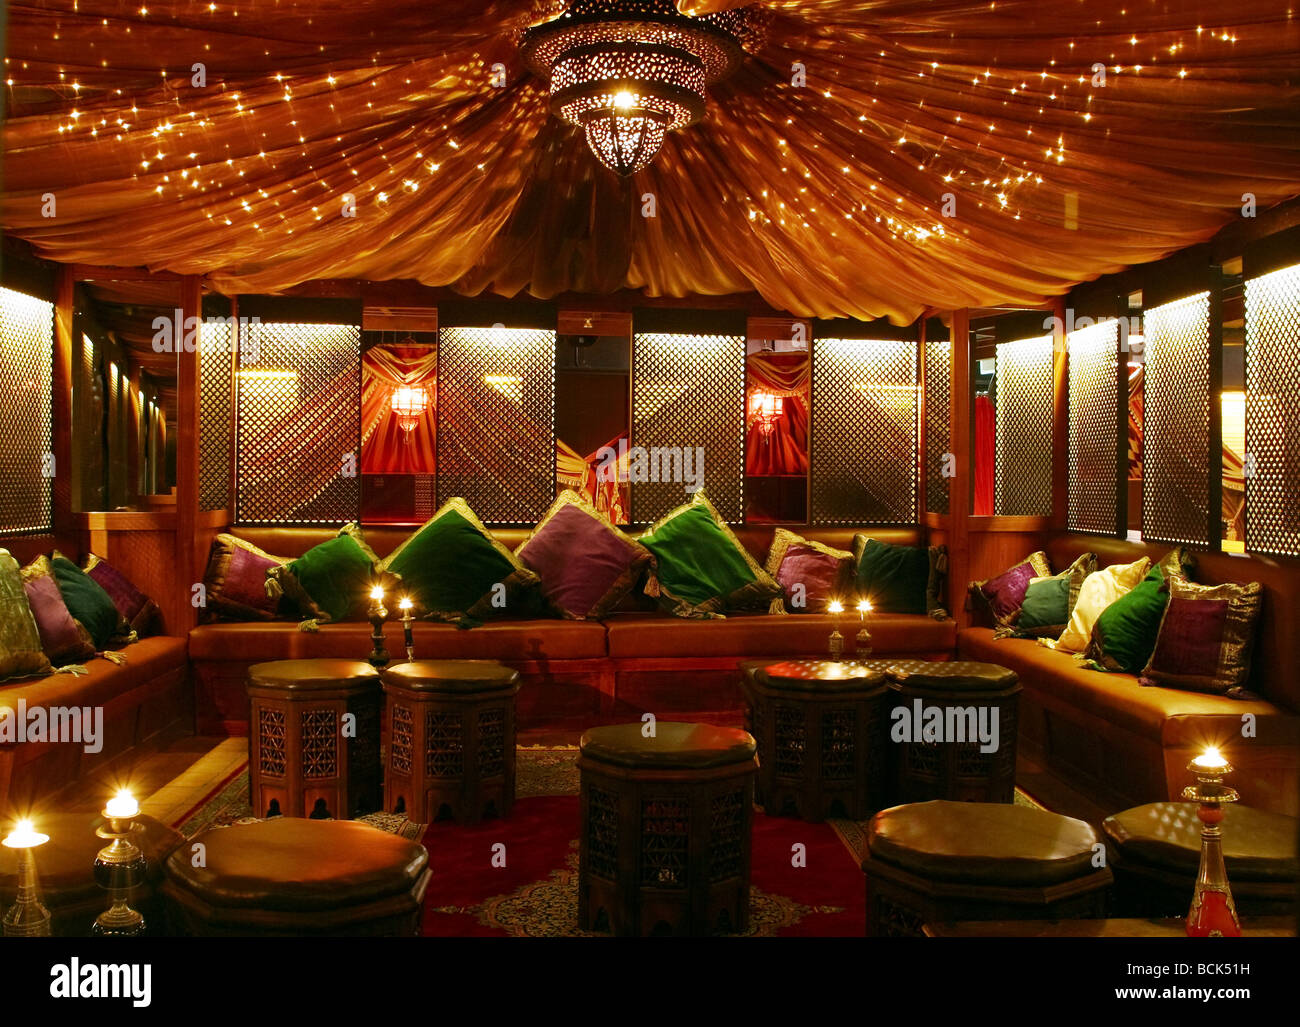 Bambu nightclub, Birmingham, moroccan theme, moroccan interiors, Stock Photo